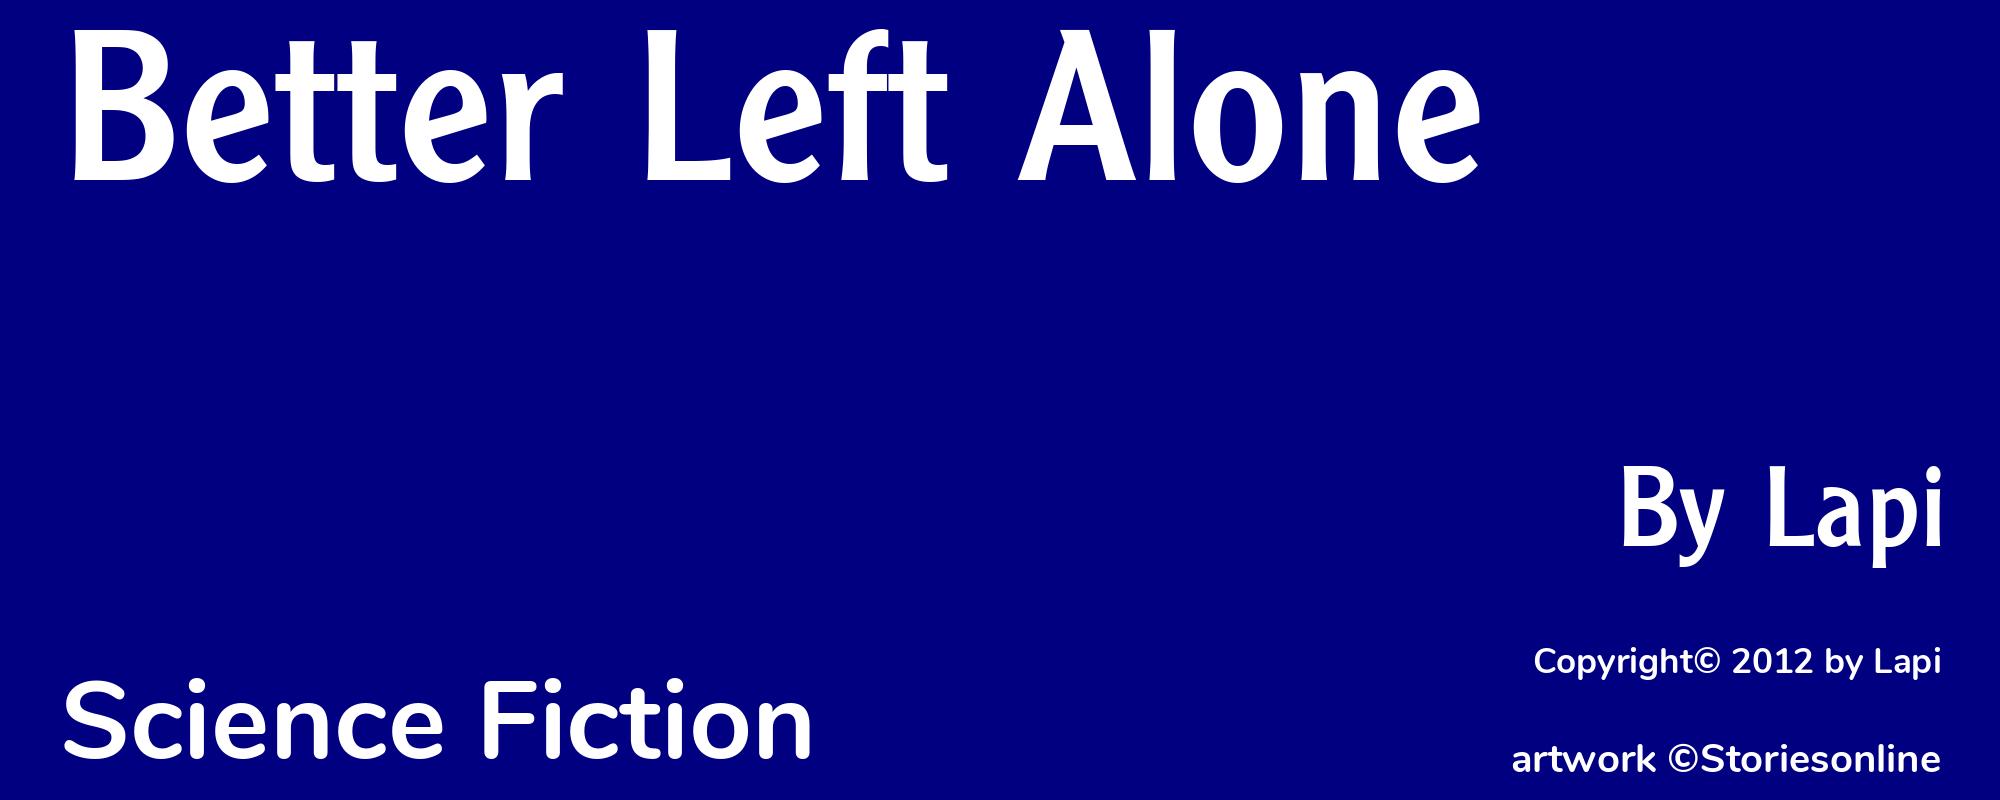 Better Left Alone - Cover